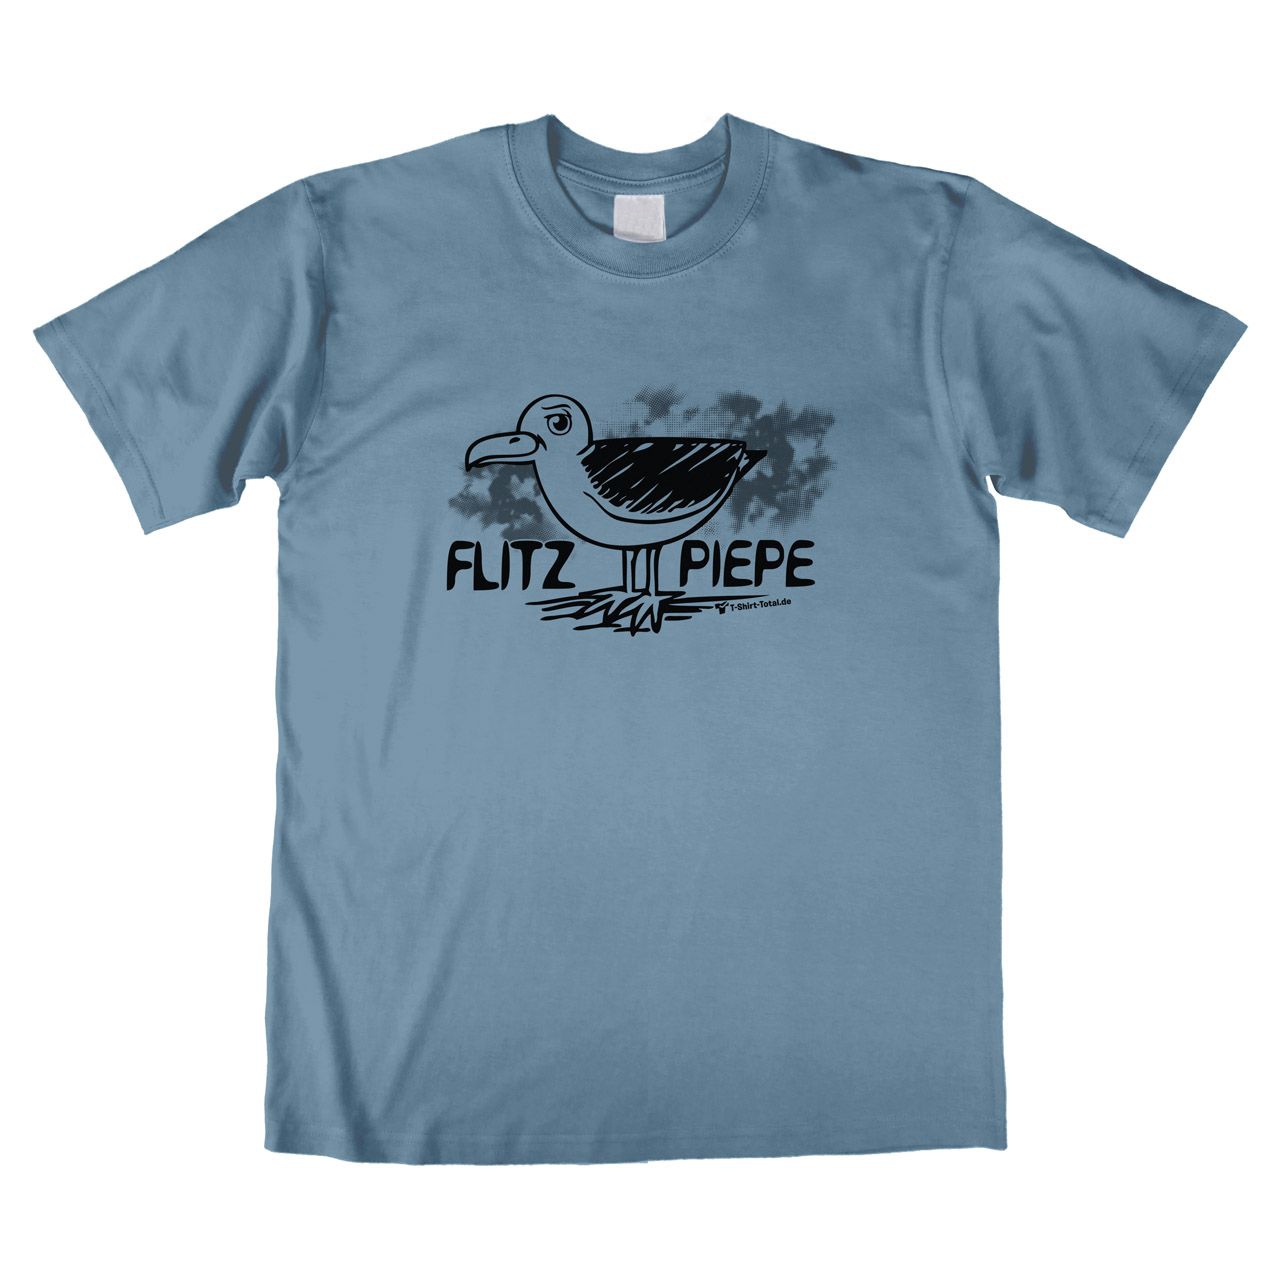 Flitzpiepe Unisex T-Shirt denim Medium